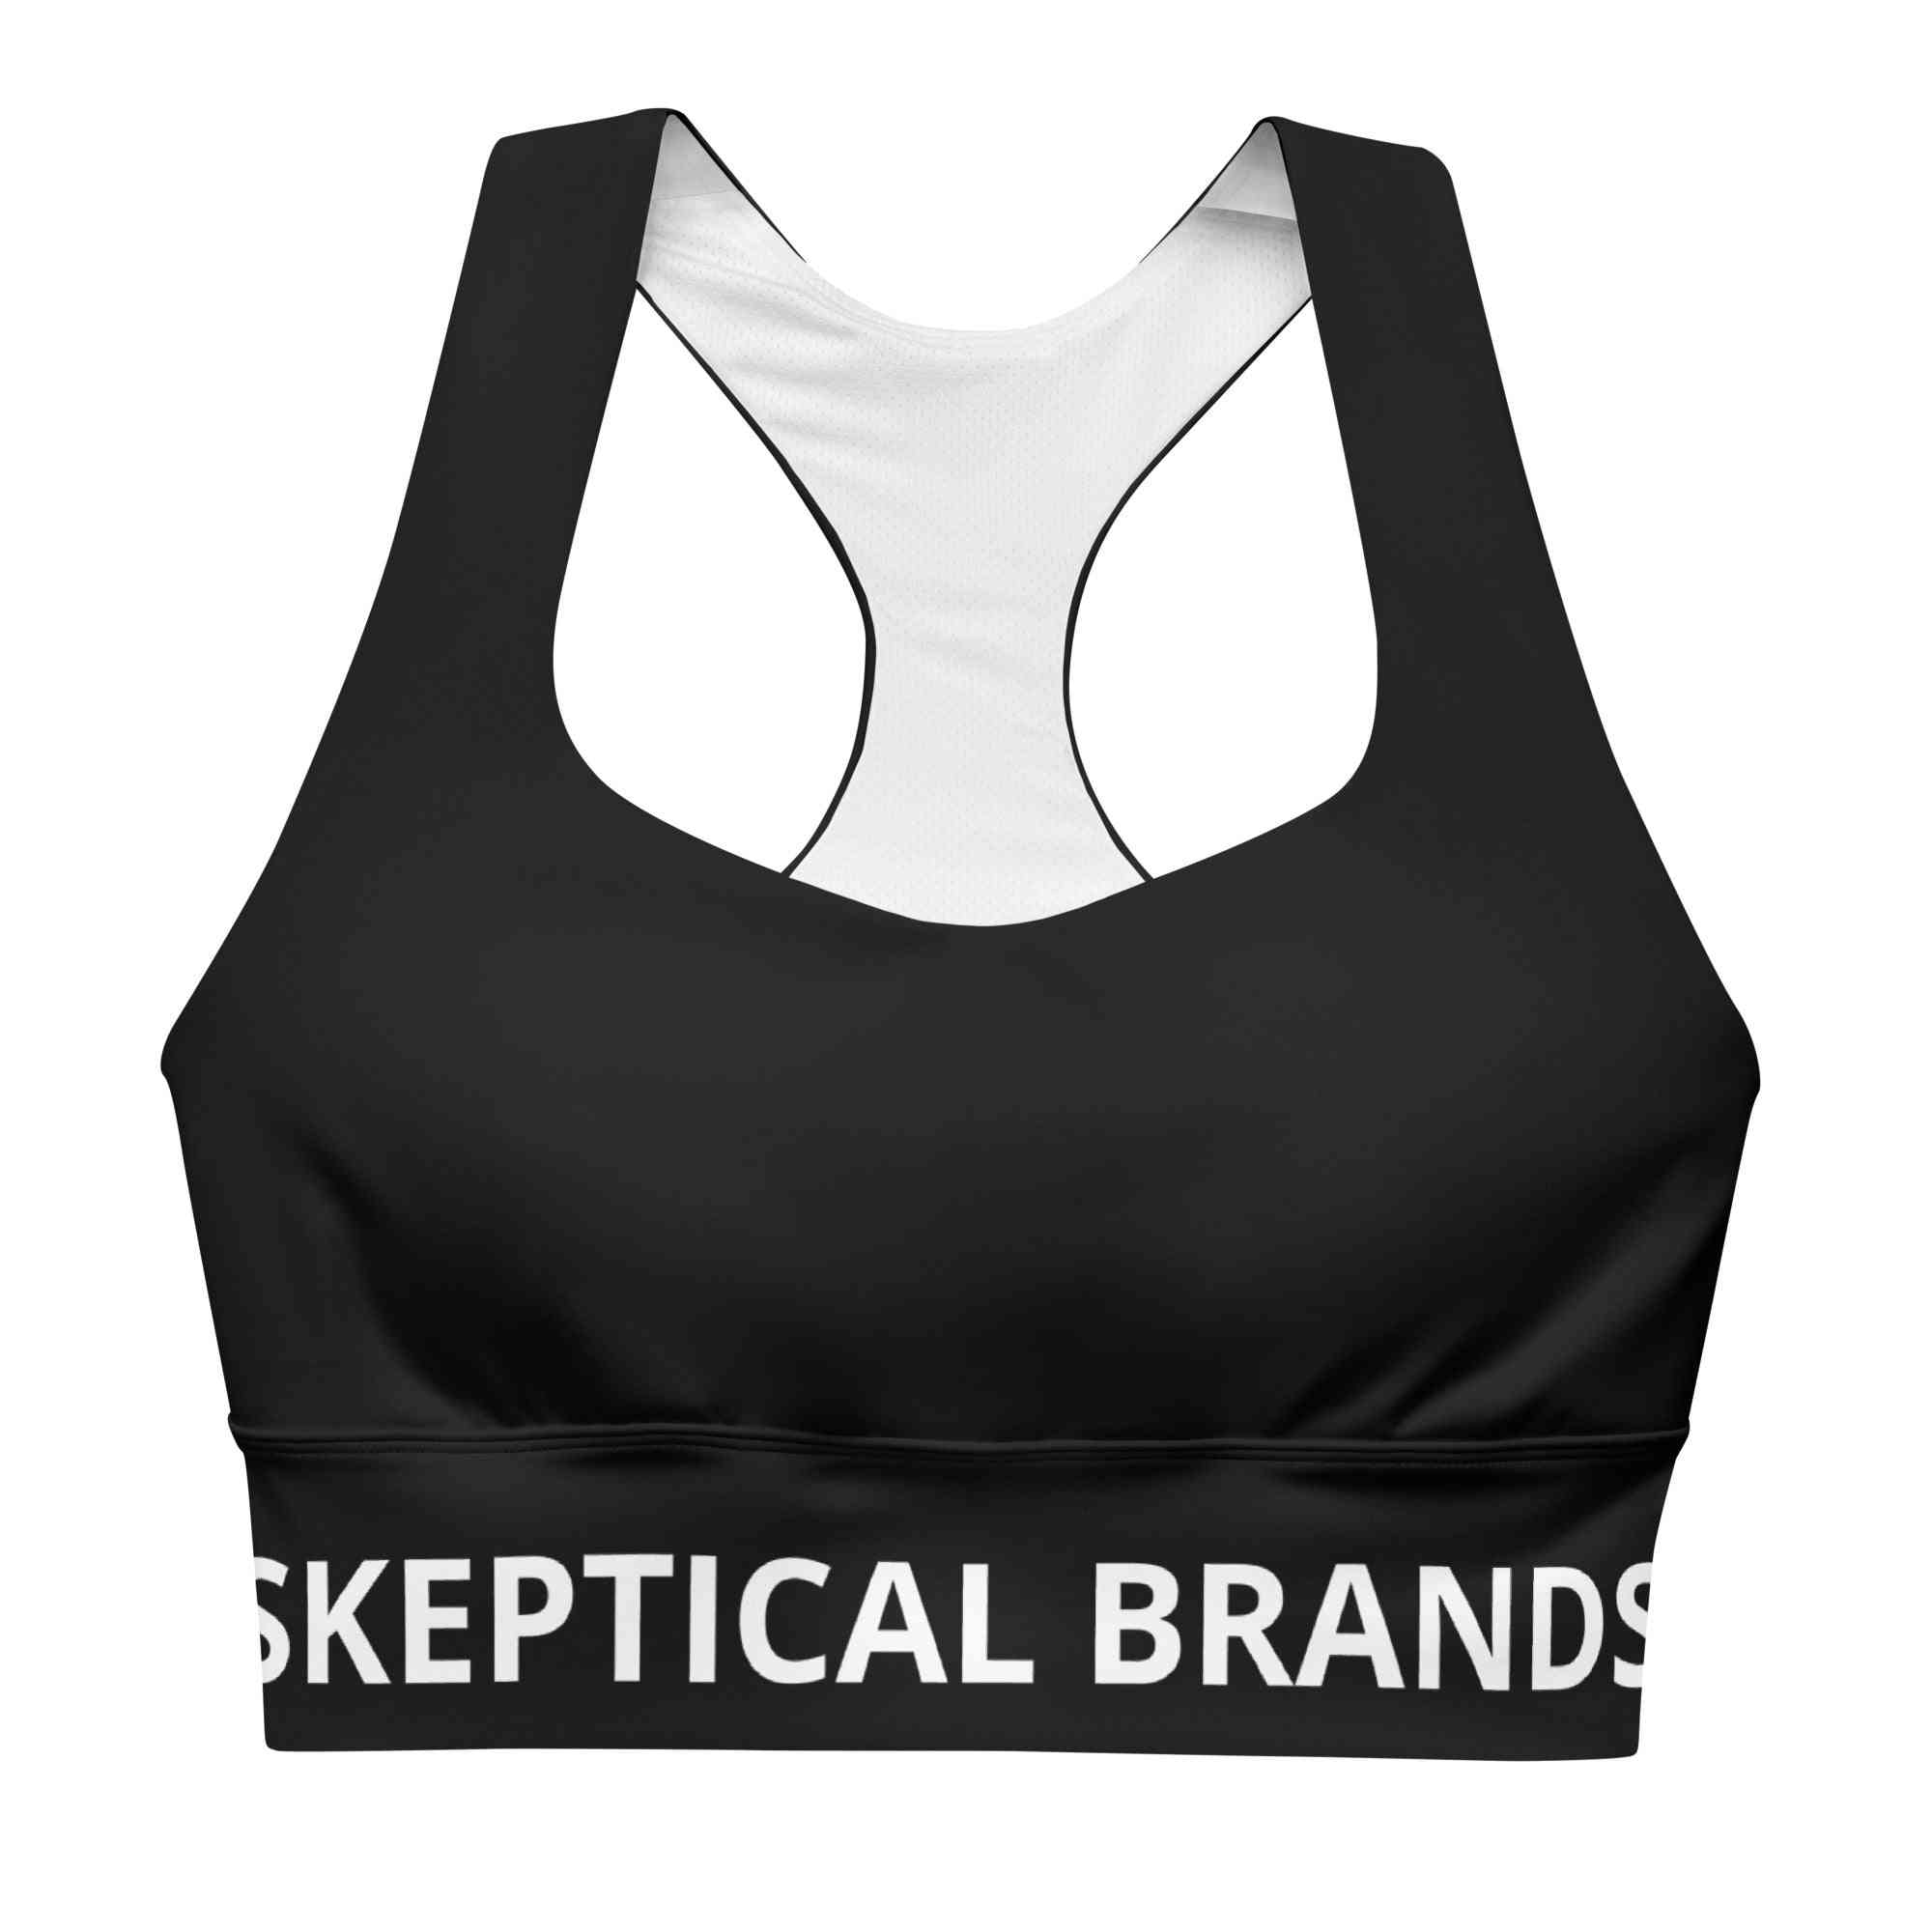 SKEPTICAL BRANDS BLACK Longline sports bra